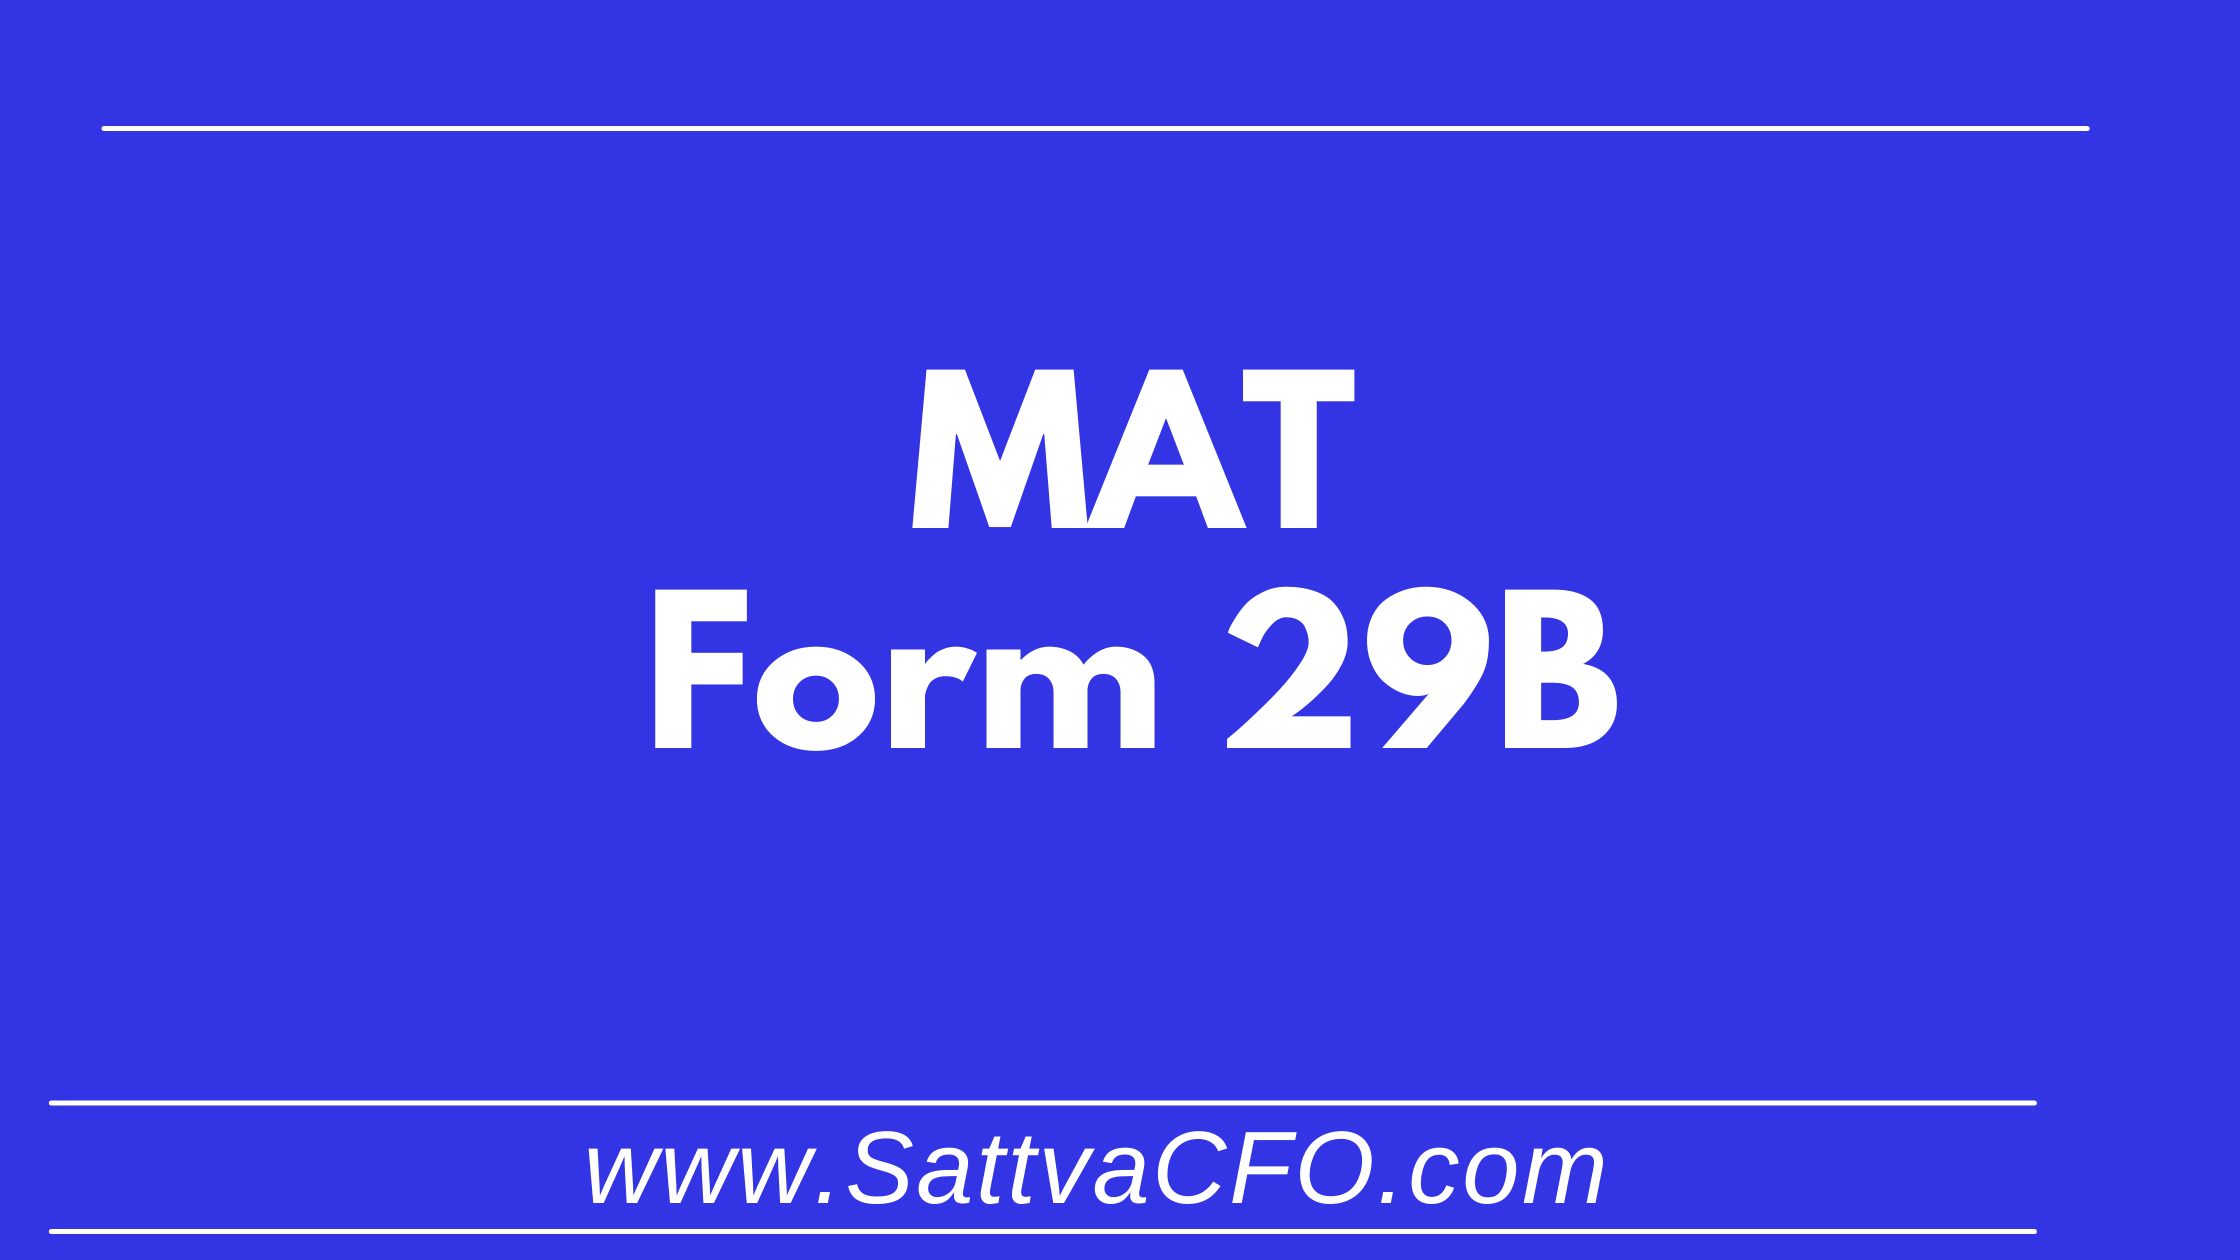 Form 29B MAT on Companies